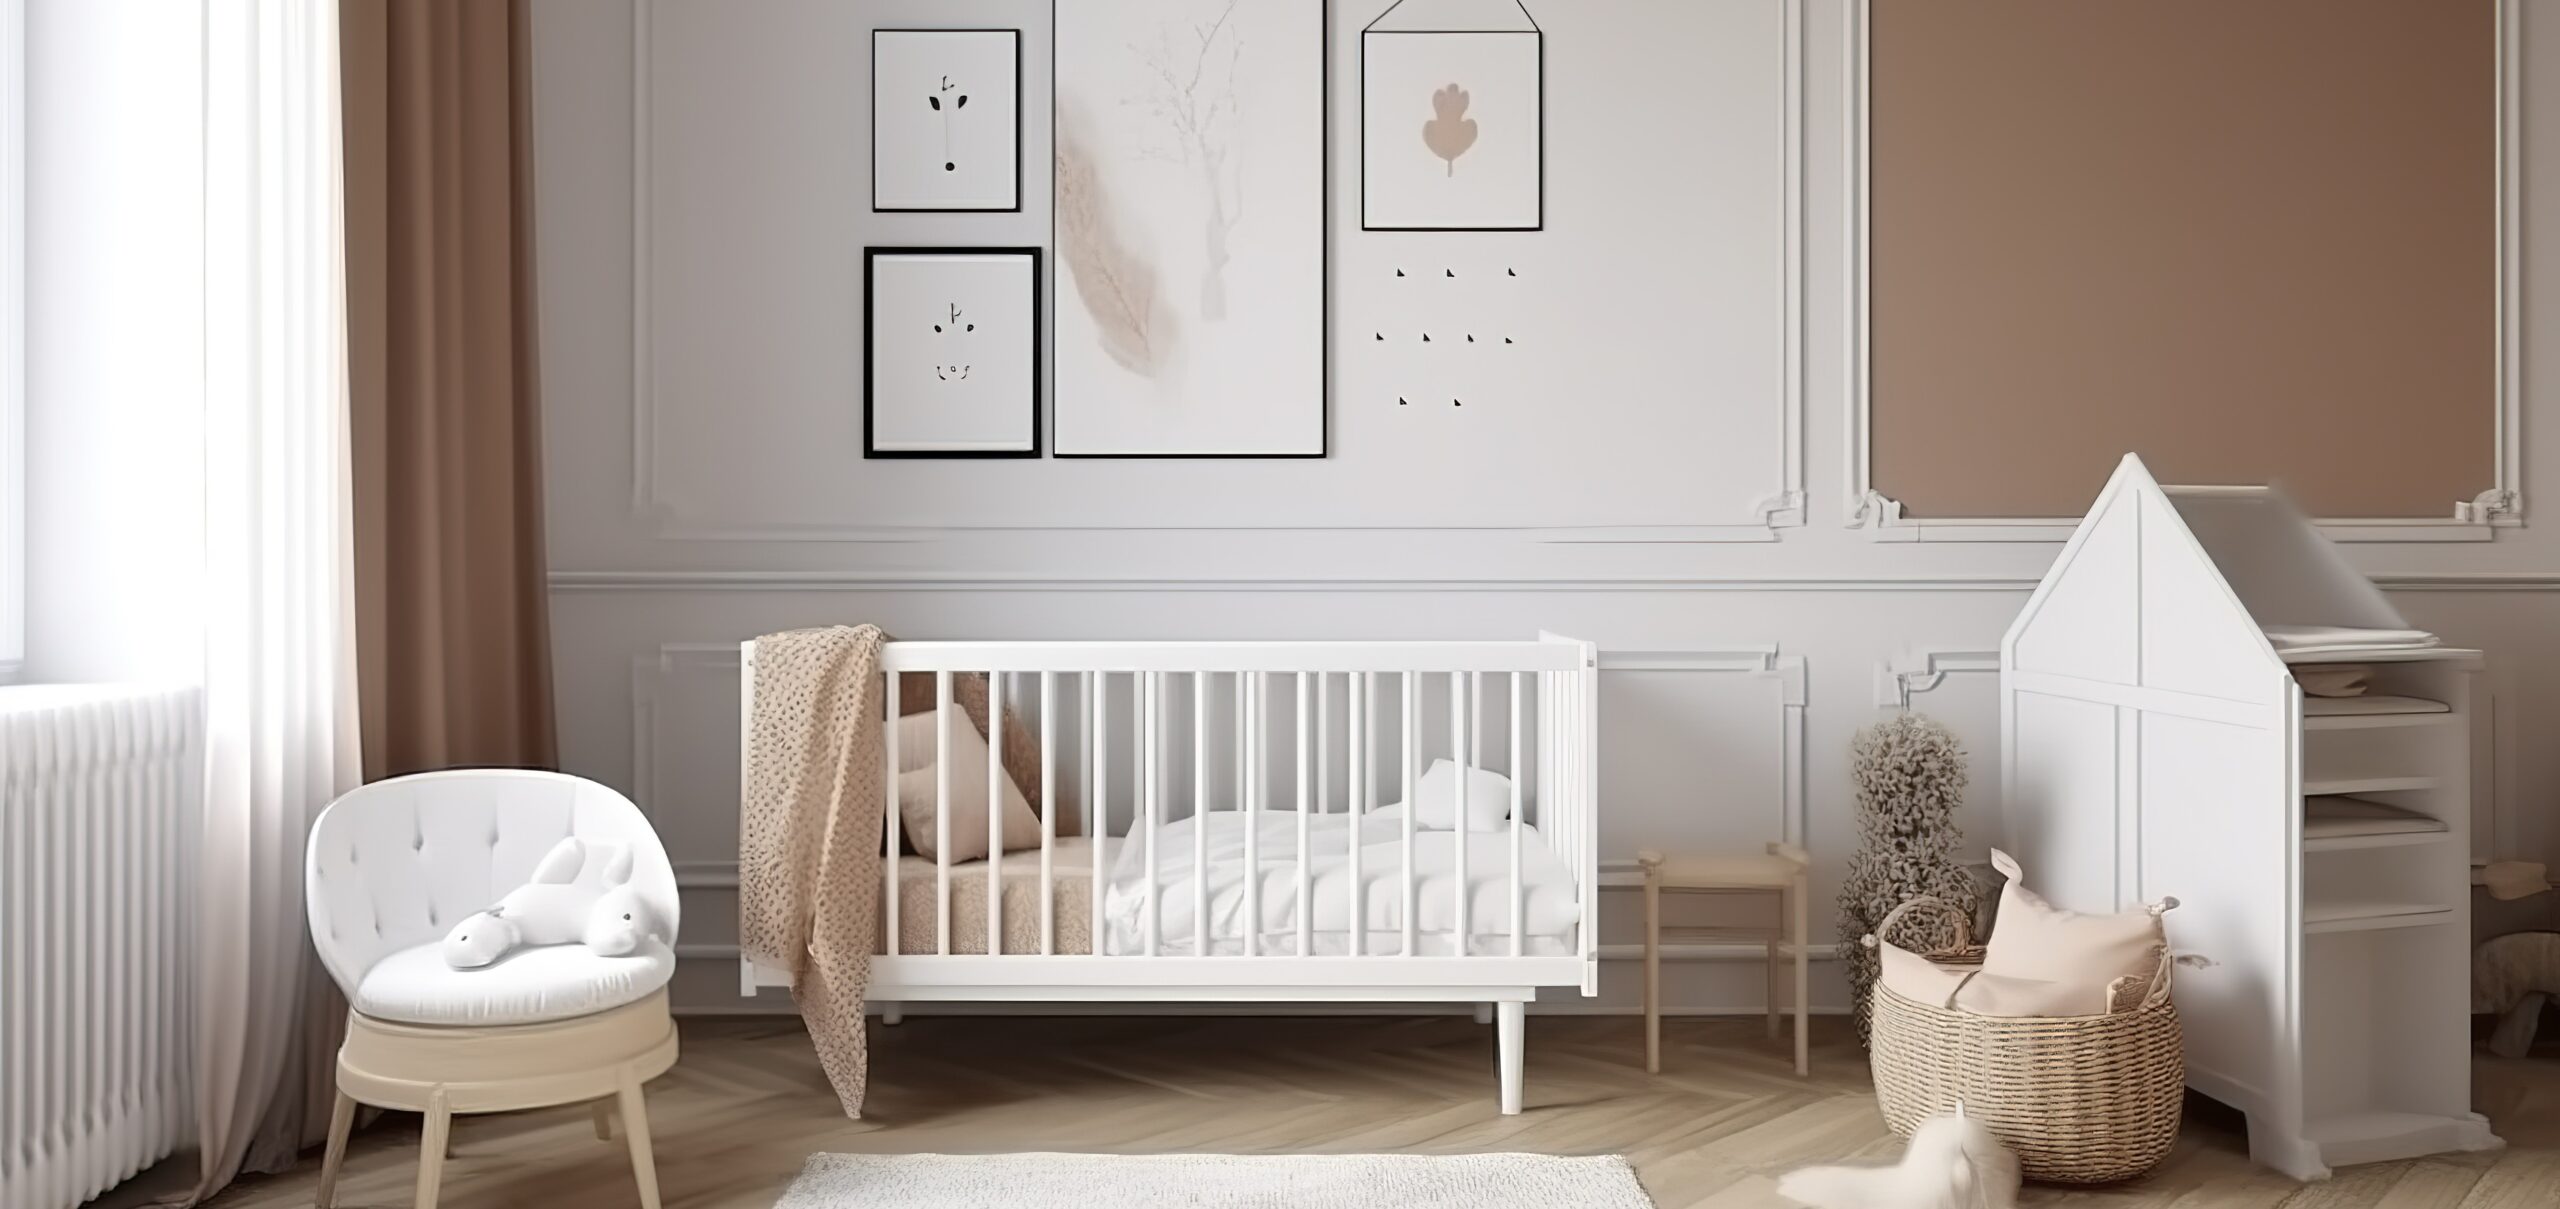 Modern minimalist nursery room in scandinavian style. Baby room interior in light colours, baby sleep furniture nursery